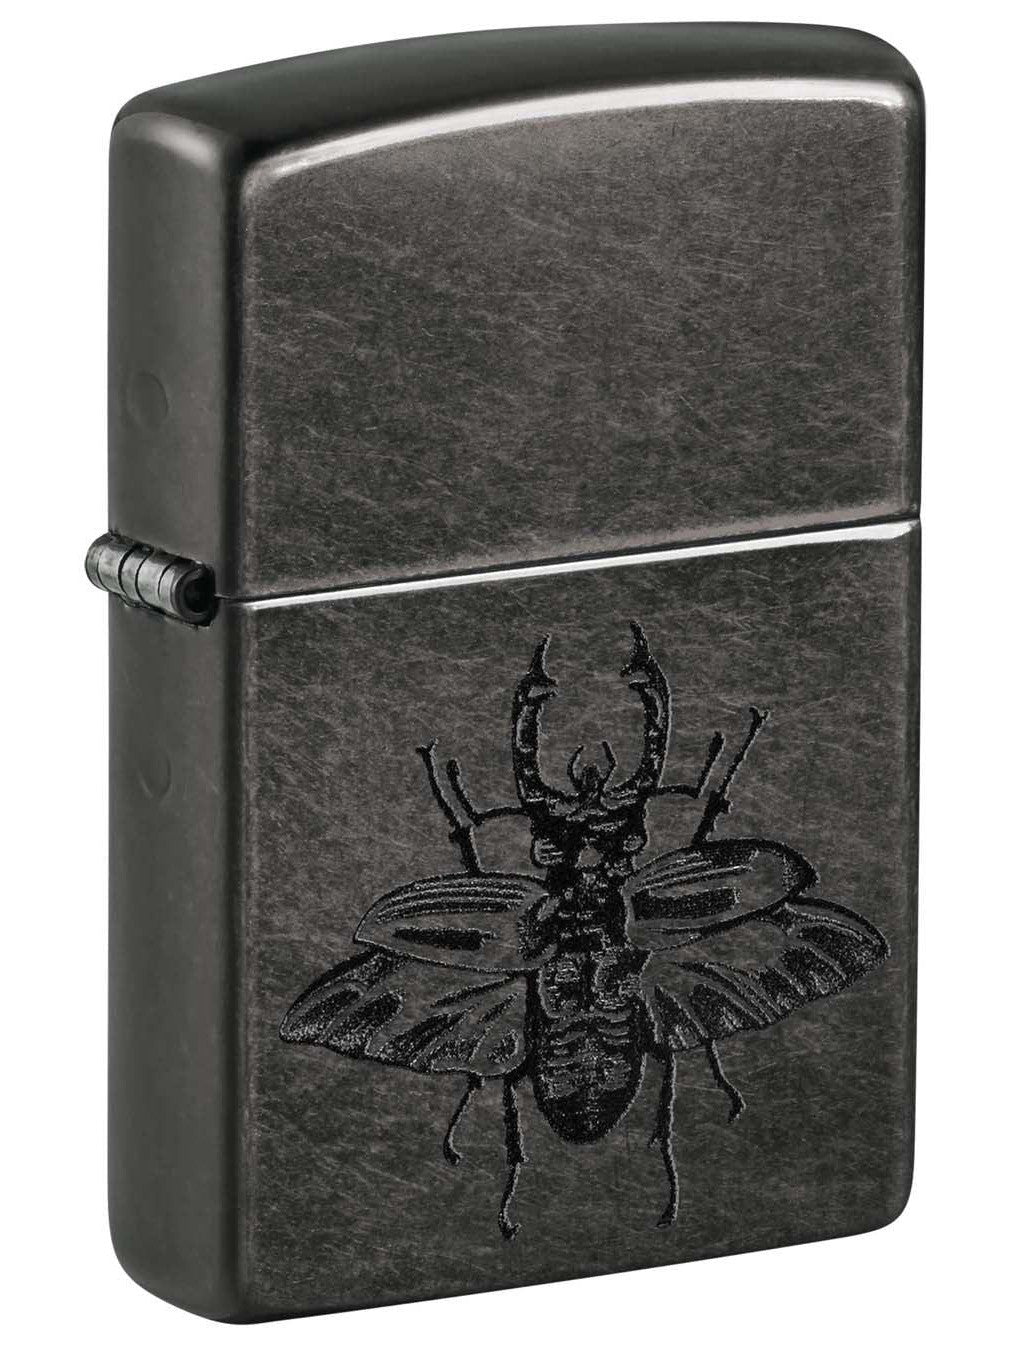 Zippo Lighter: Insect Design - Gray 48856